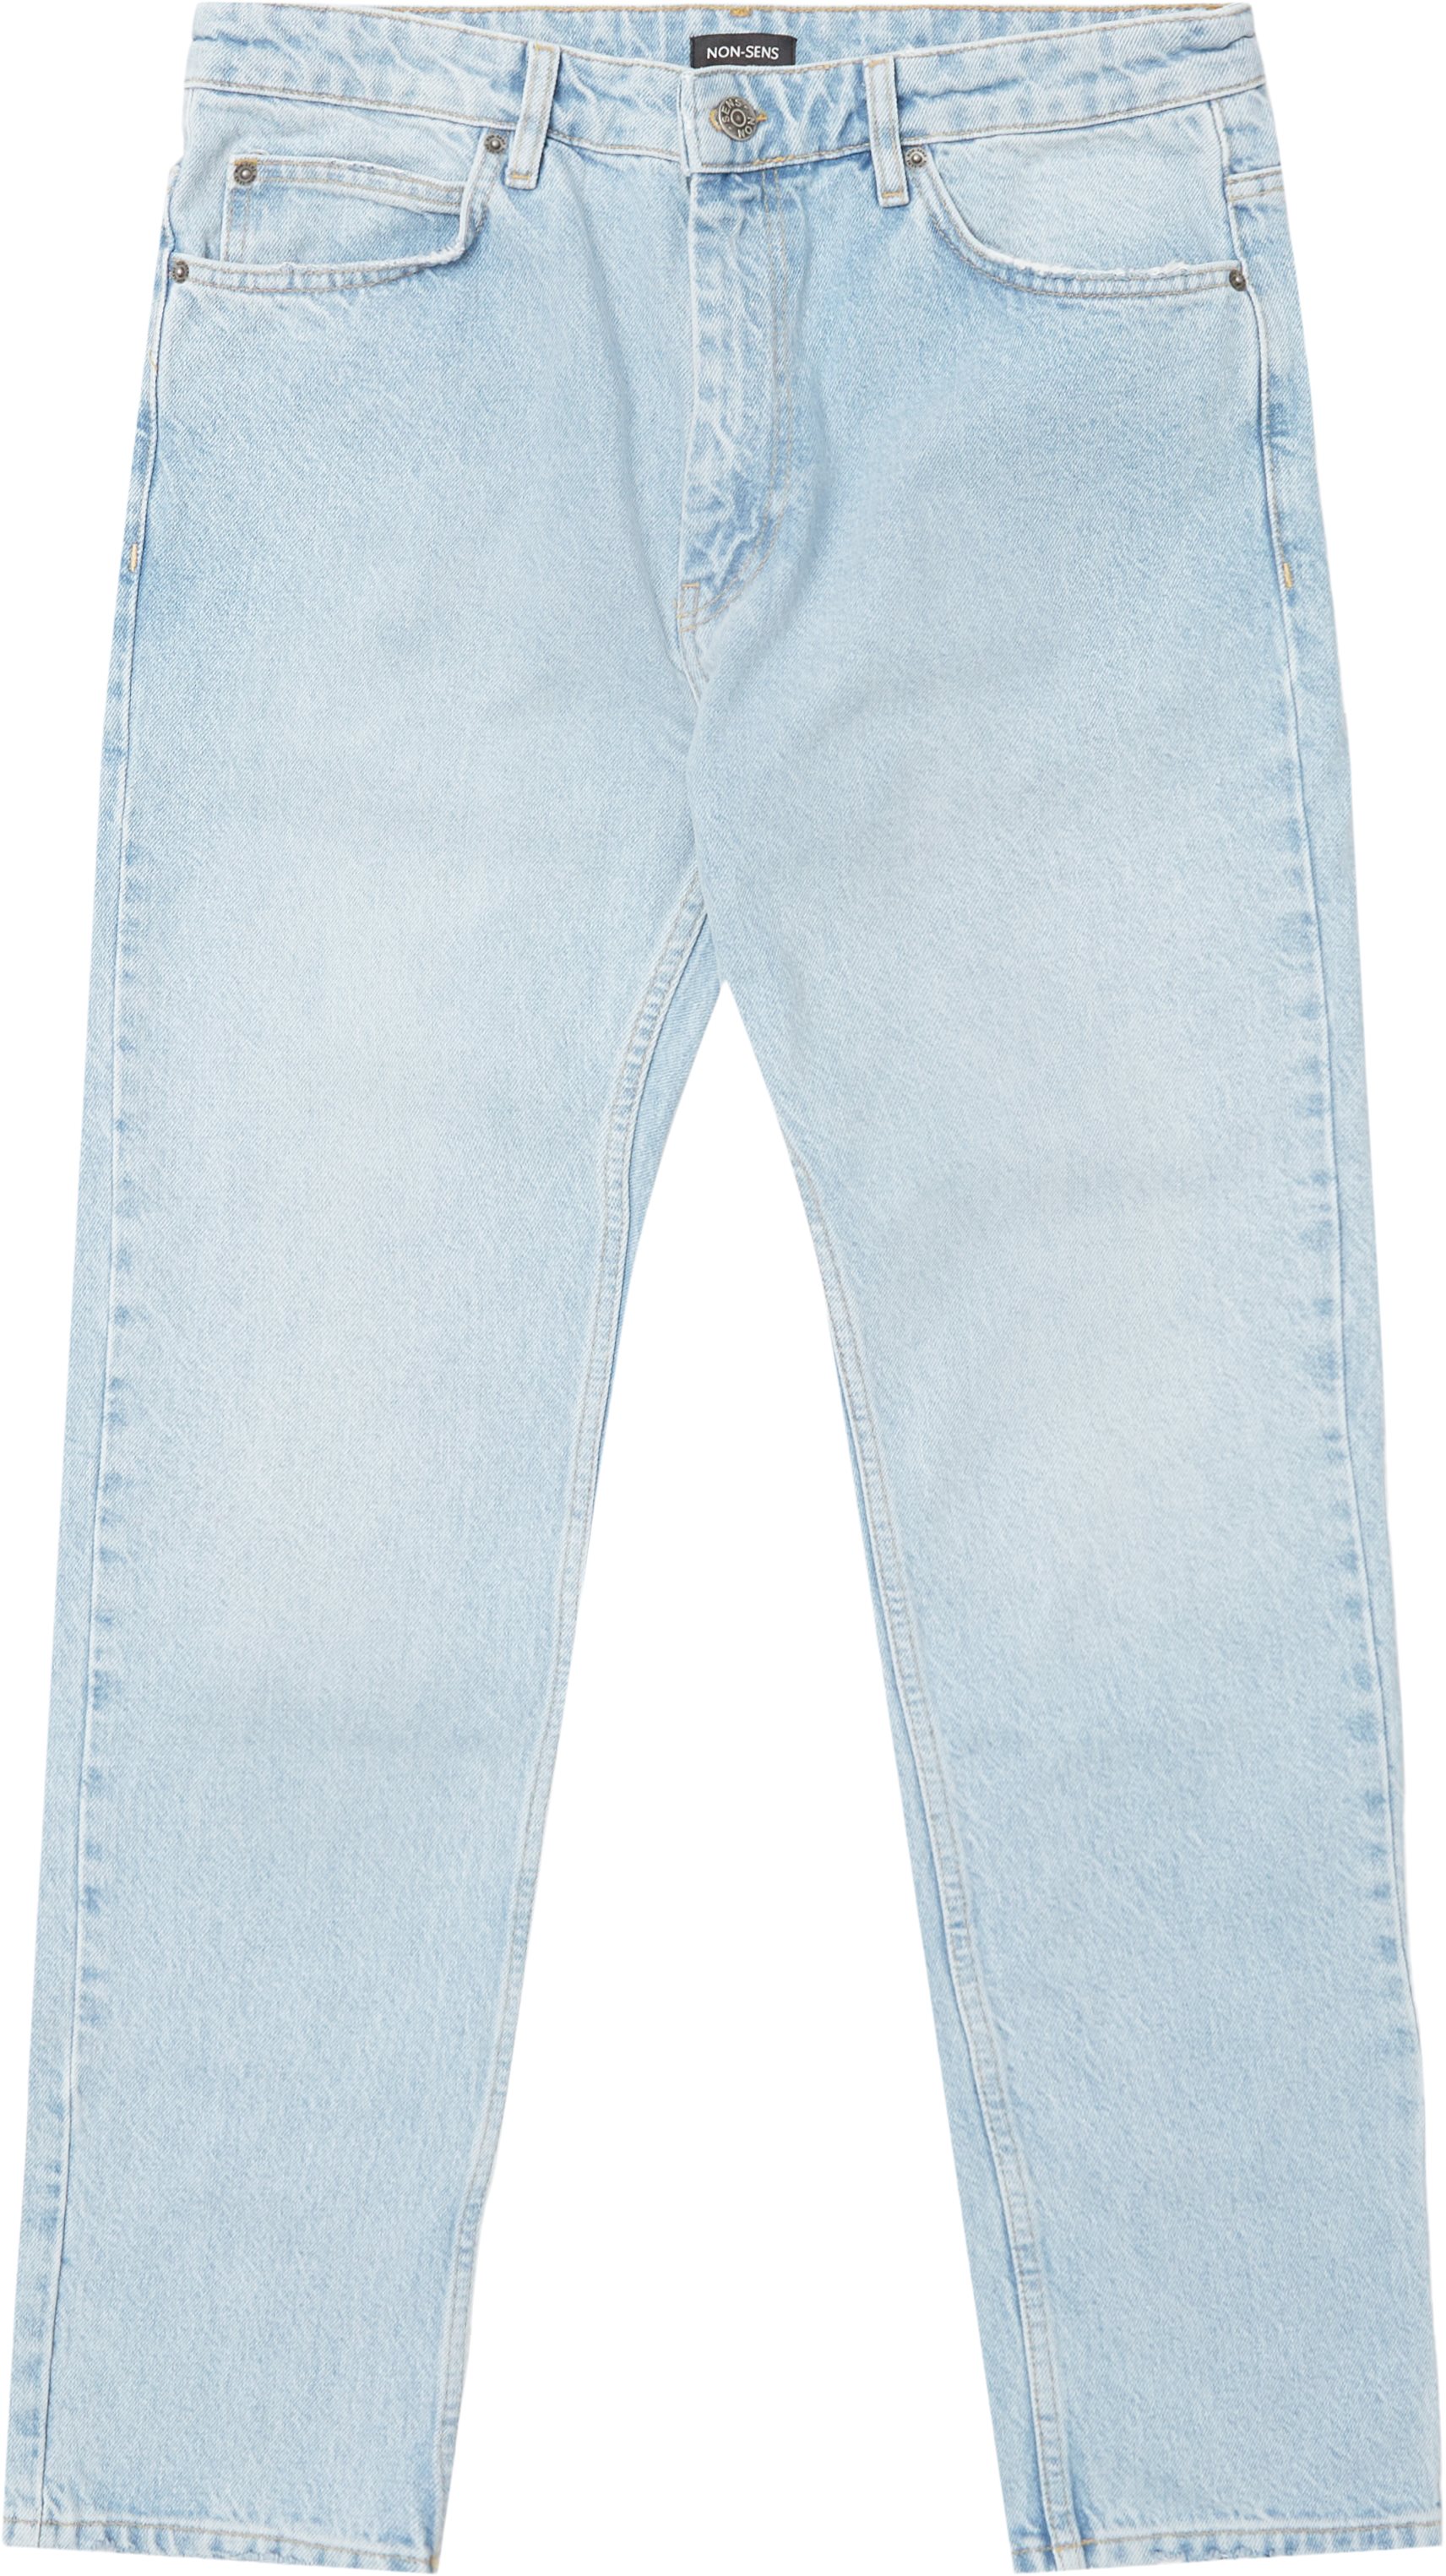 Montana Bleach Blue Jeans - Jeans - Straight fit - Denim